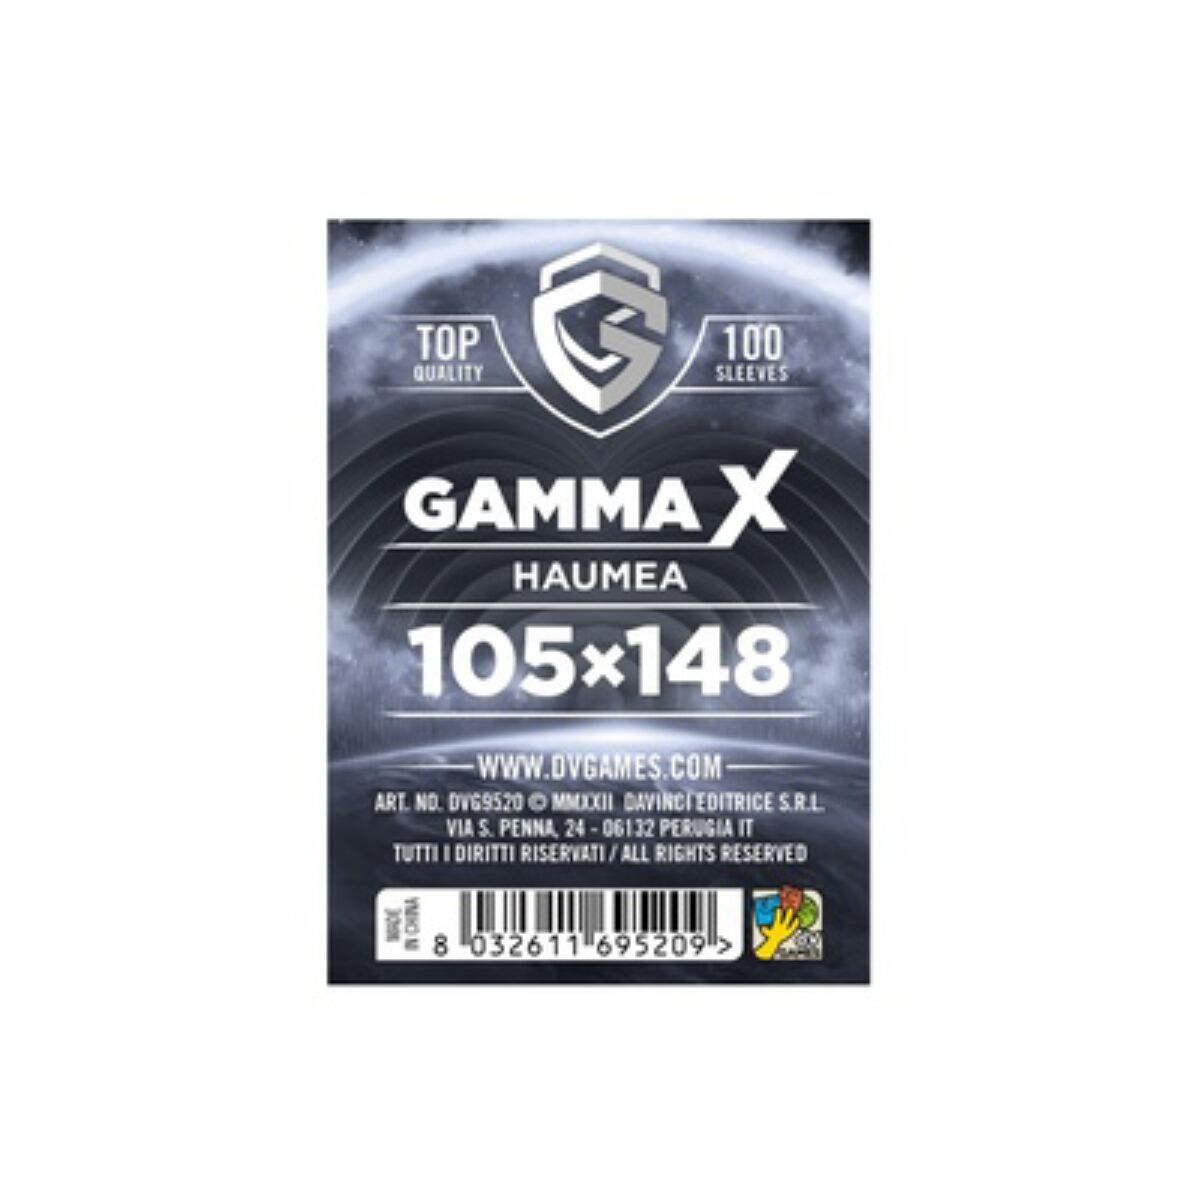 Bustine protettive Gamma X - Haumea - 105x148